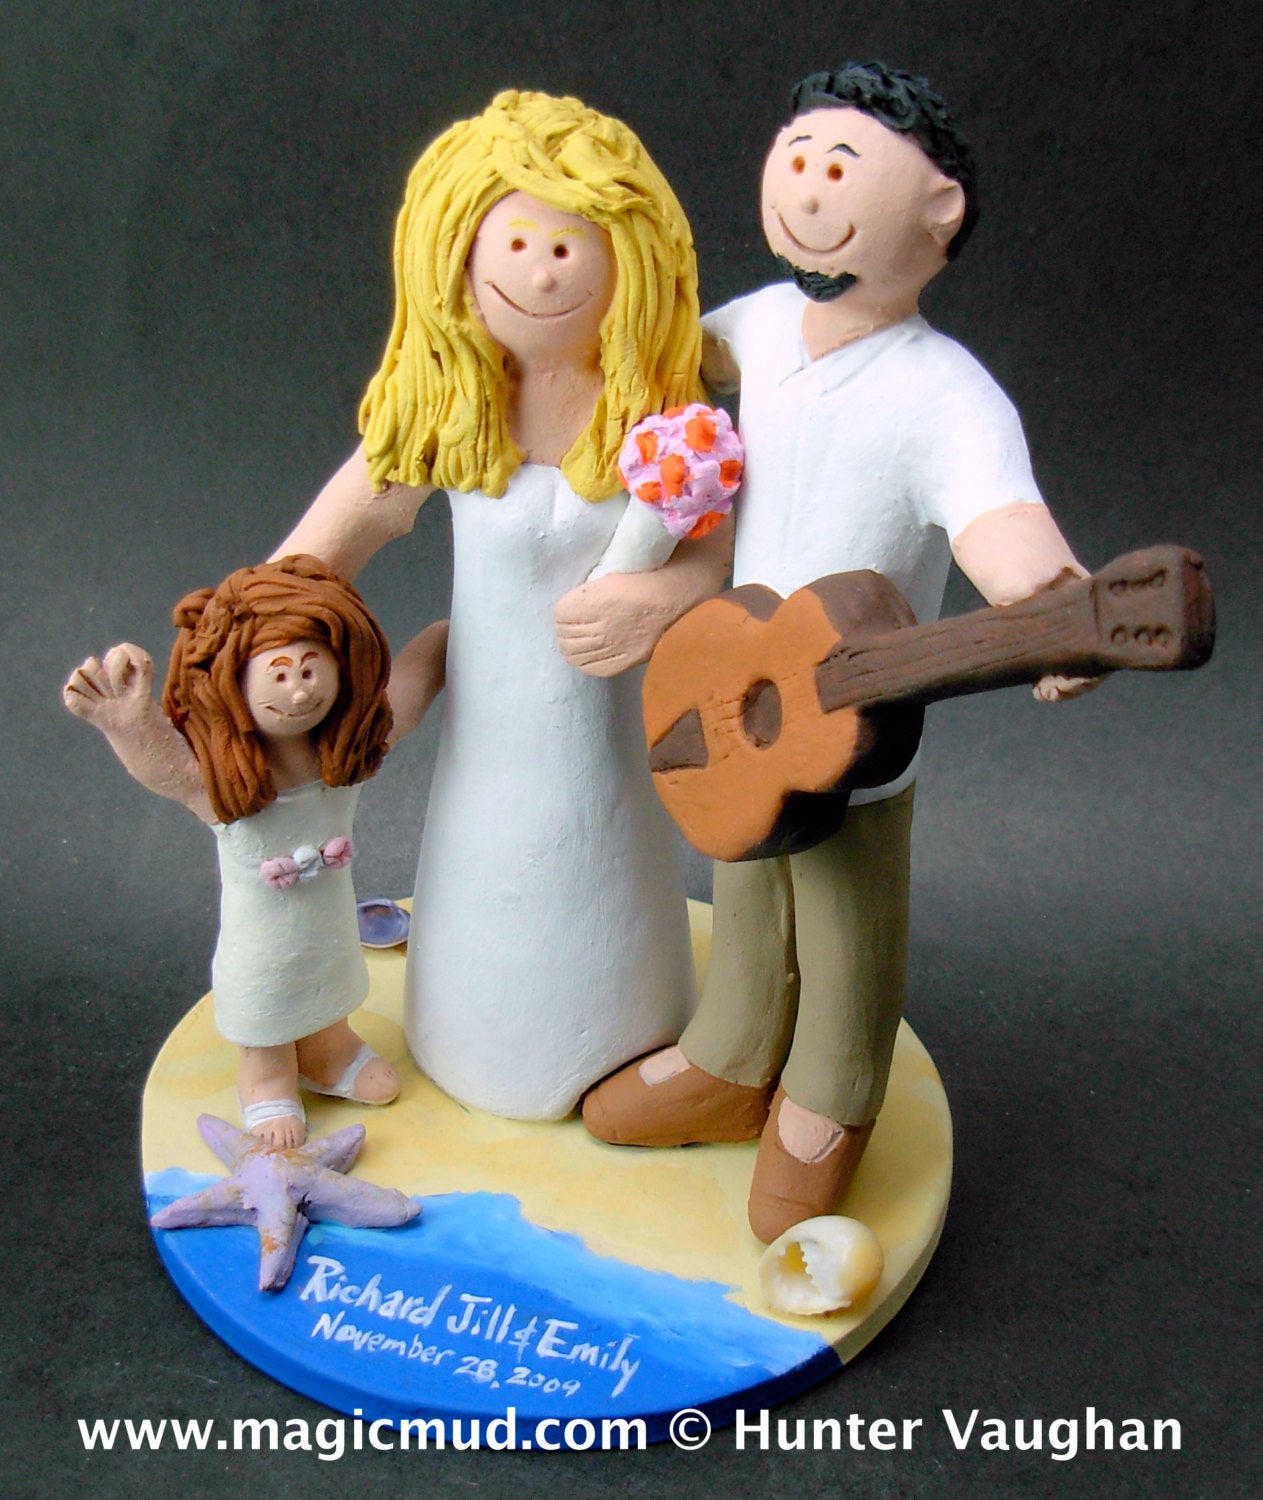 Acoustic Guitarist's Wedding Cake Topper, Guitar Wedding Cake Topper, Wedding Cake Topper with Daughter, Step Daughter Wedding Cake Topper - iWeddingCakeToppers